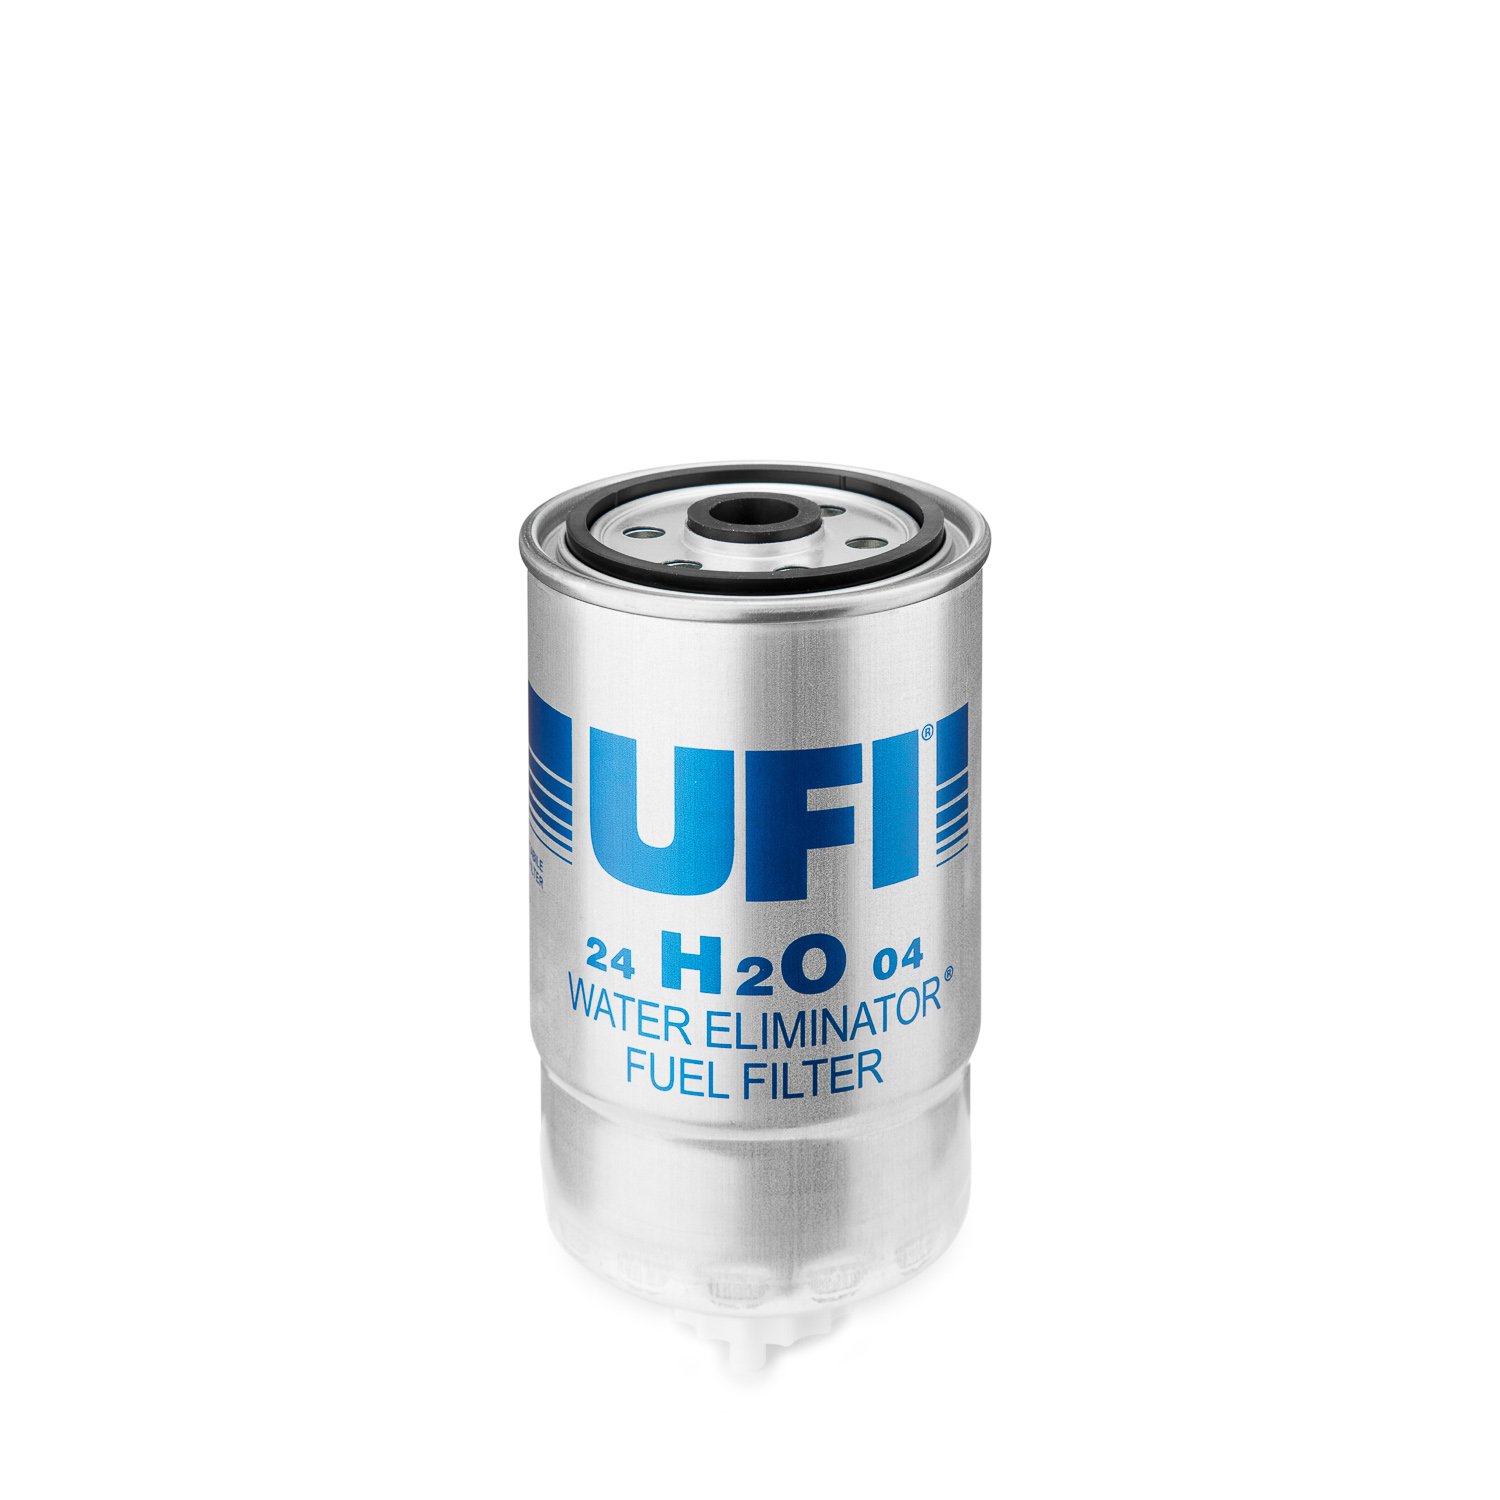 UFI FILTERS Filters 24.H2O.04 Dieselfilter von UFI